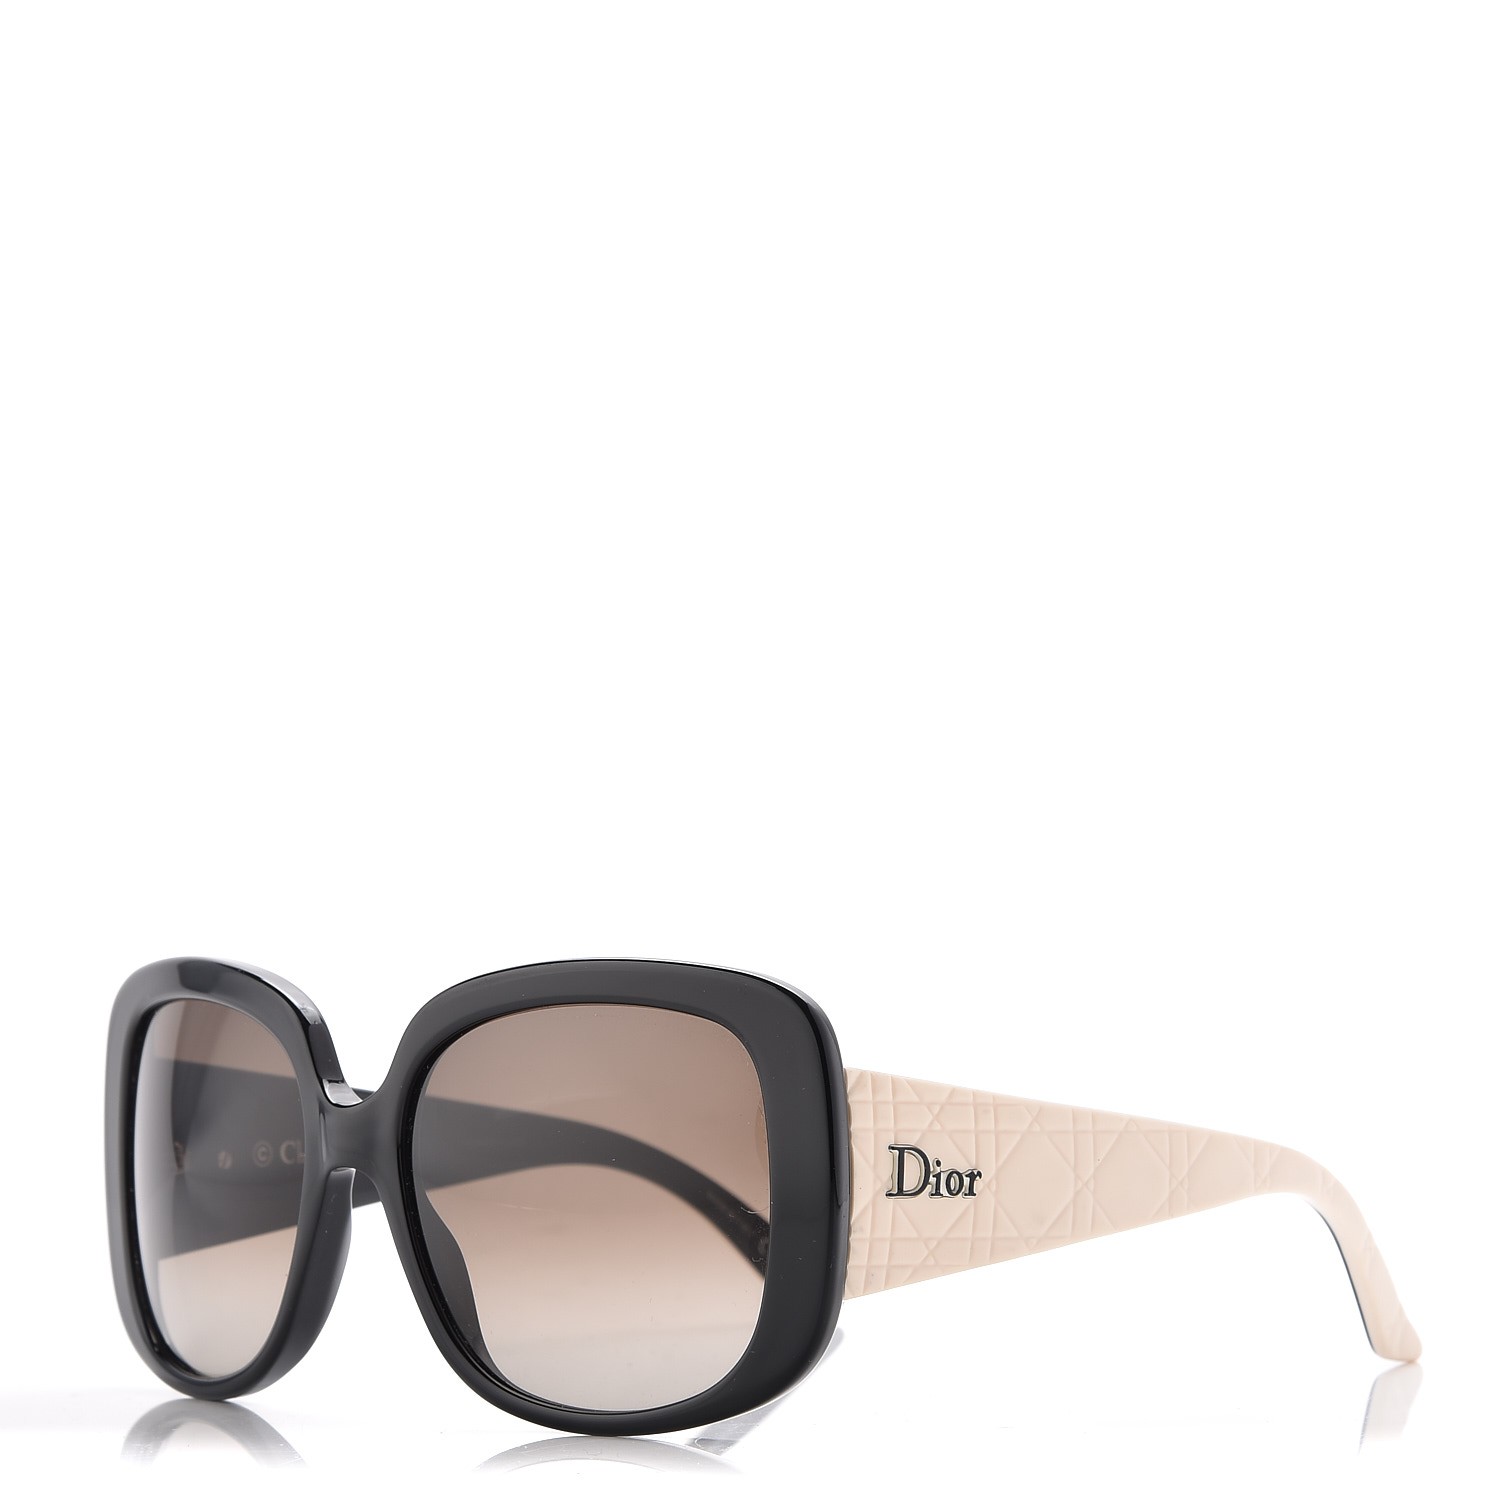 dior lady lady 2 sunglasses